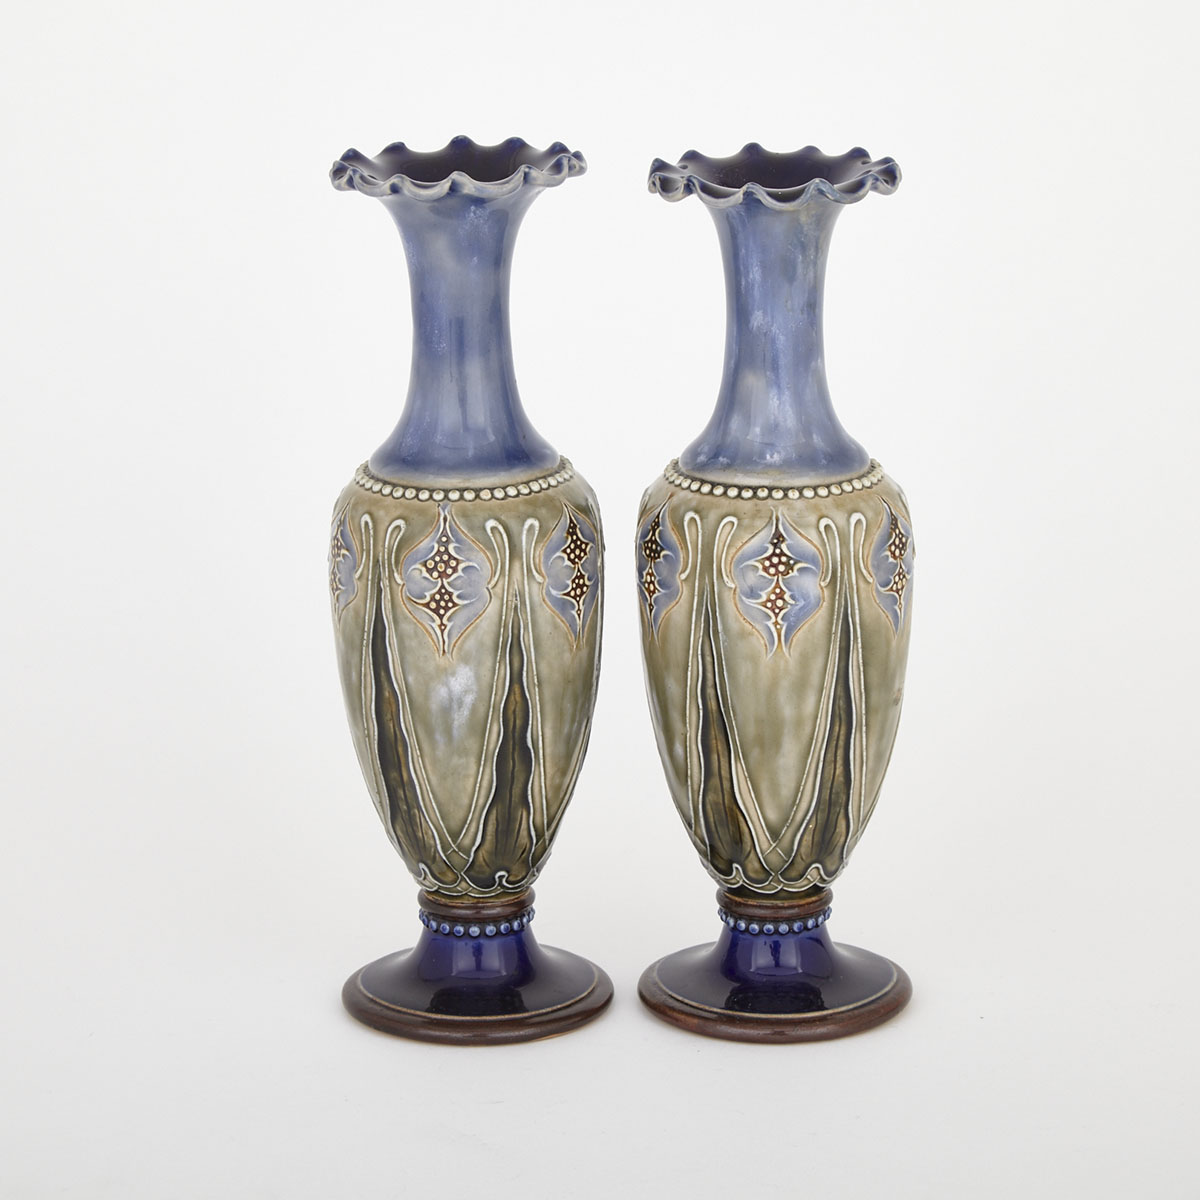 Pair of Royal Doulton Stoneware Vases, Eliza Simmance, early 20th century